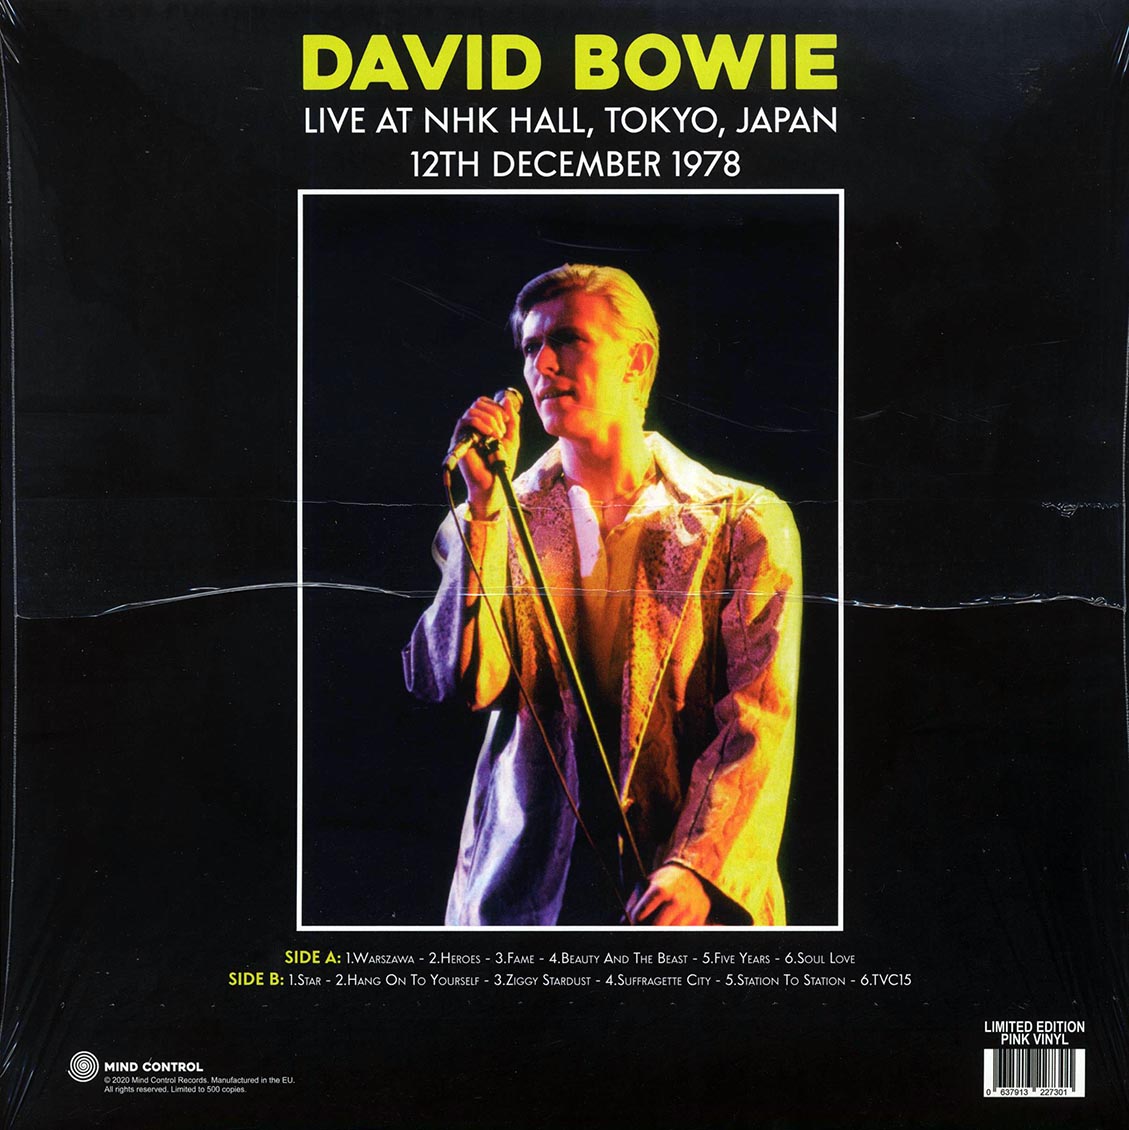 David Bowie - Live At NHK Hall, Tokyo, Japan, 12th December 1978 (ltd. 500 copies made) (pink vinyl) - Vinyl LP, LP